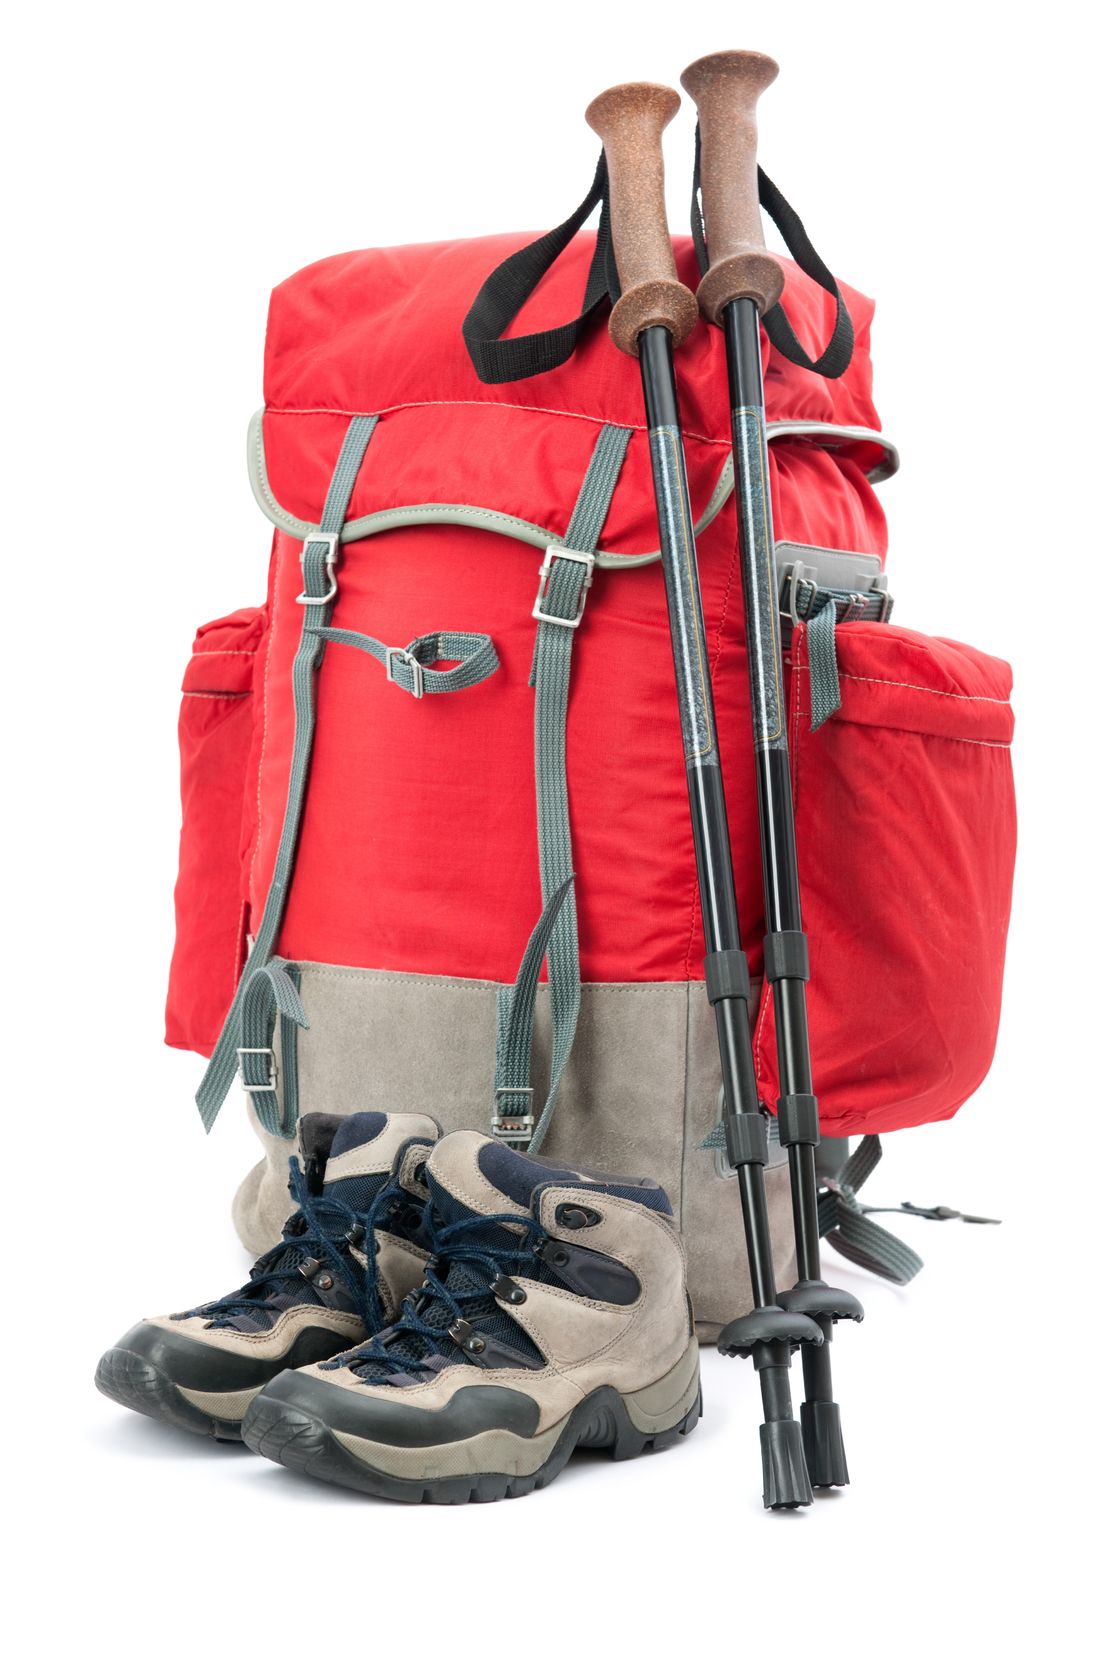 7376245 - hiking equipment, rucksack and boots